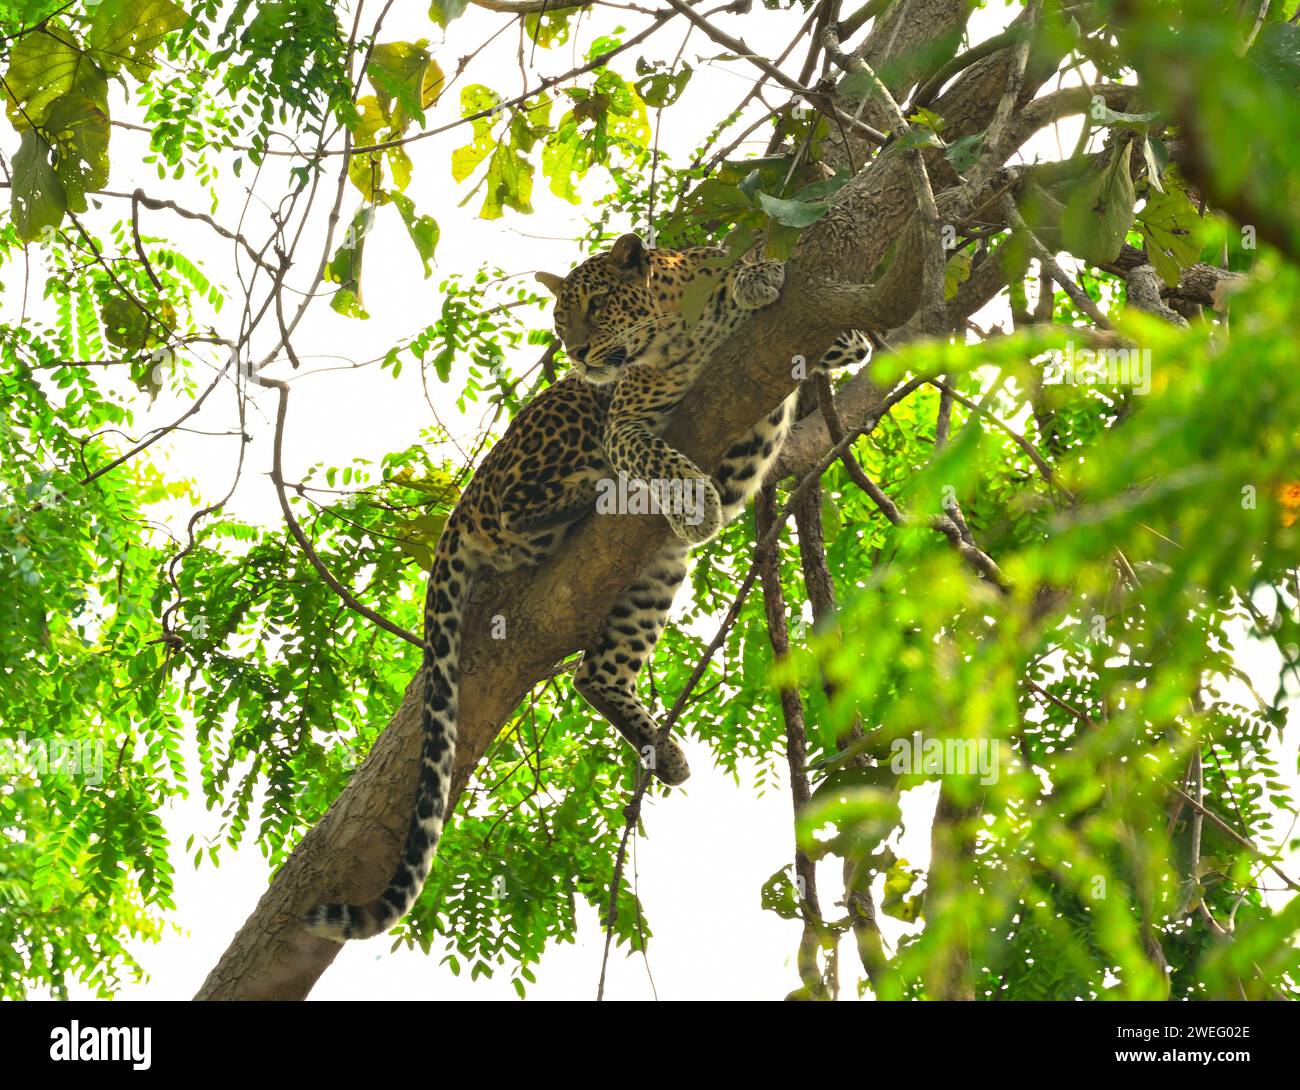 Visage de léopard vu serrant à la branche d'arbre Banque D'Images